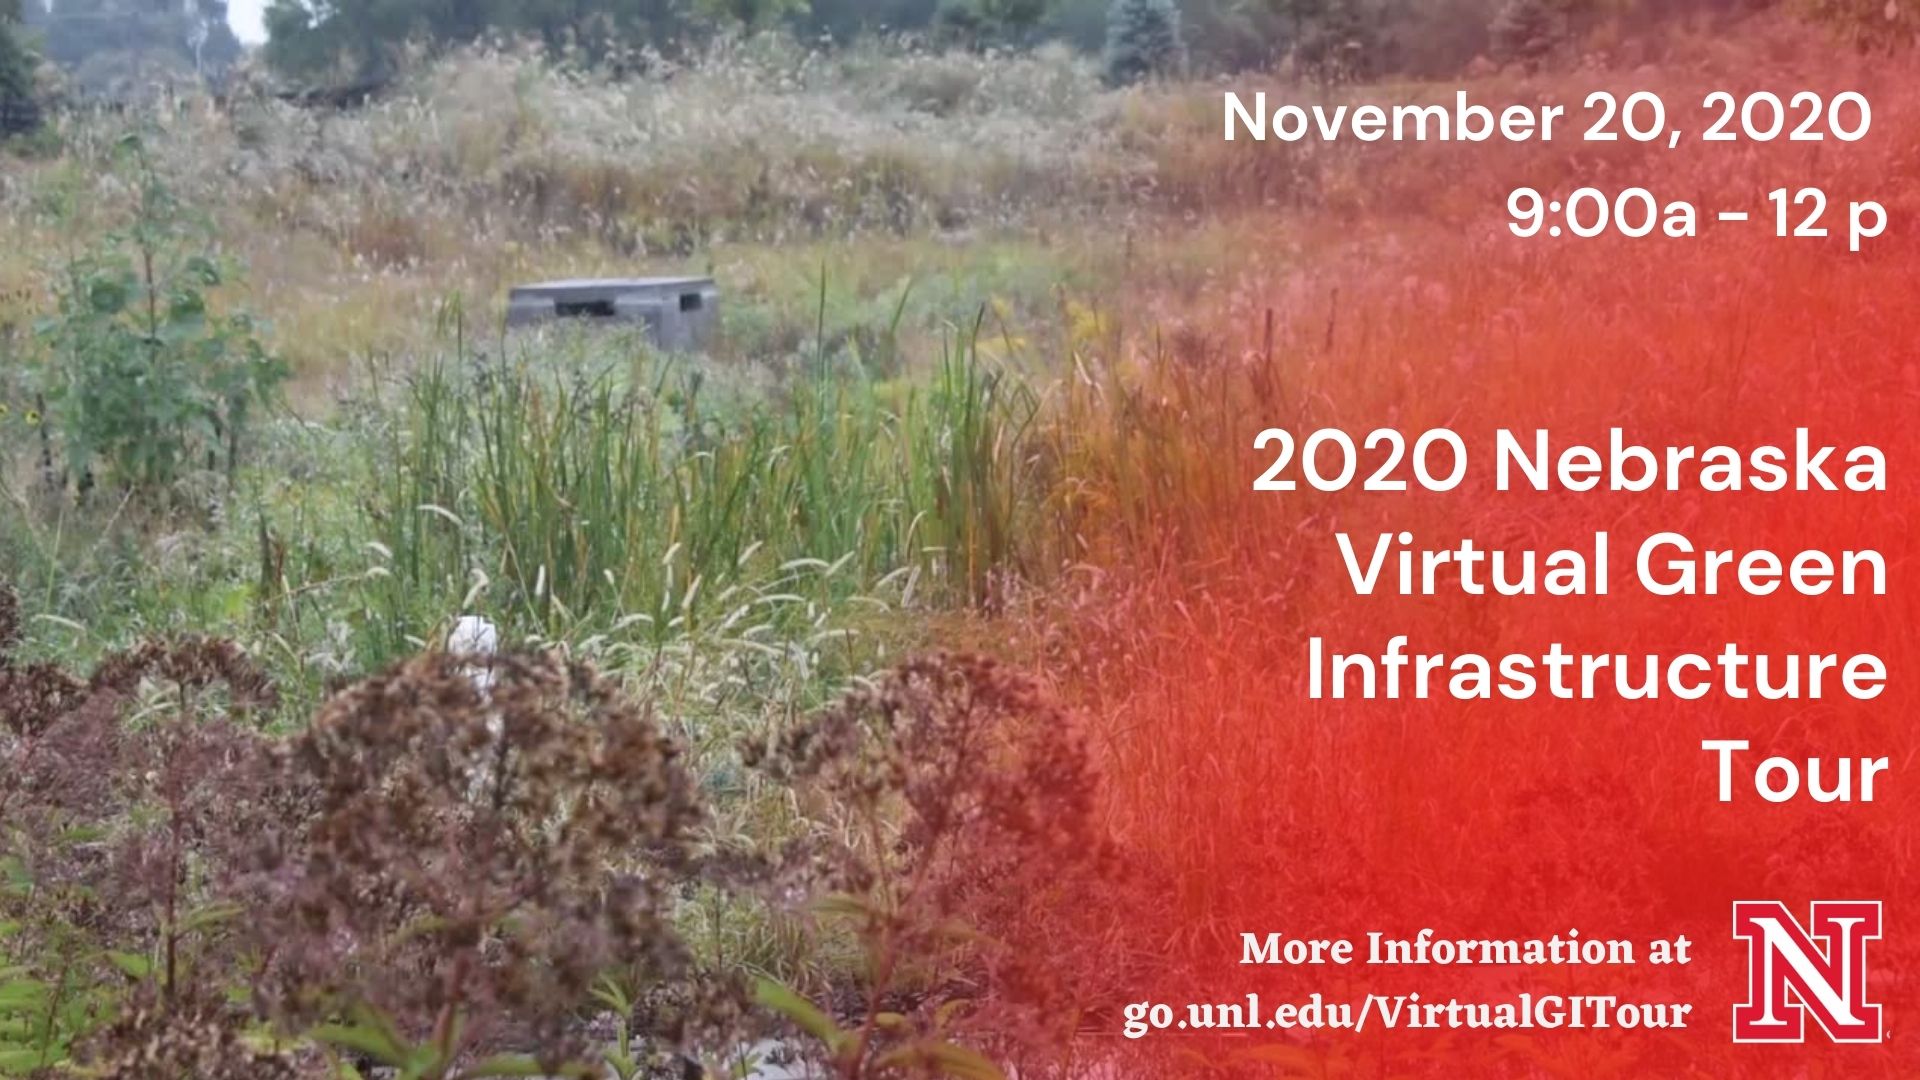 2020 Nebraska Virtual Green Infrastructure Tour flyer